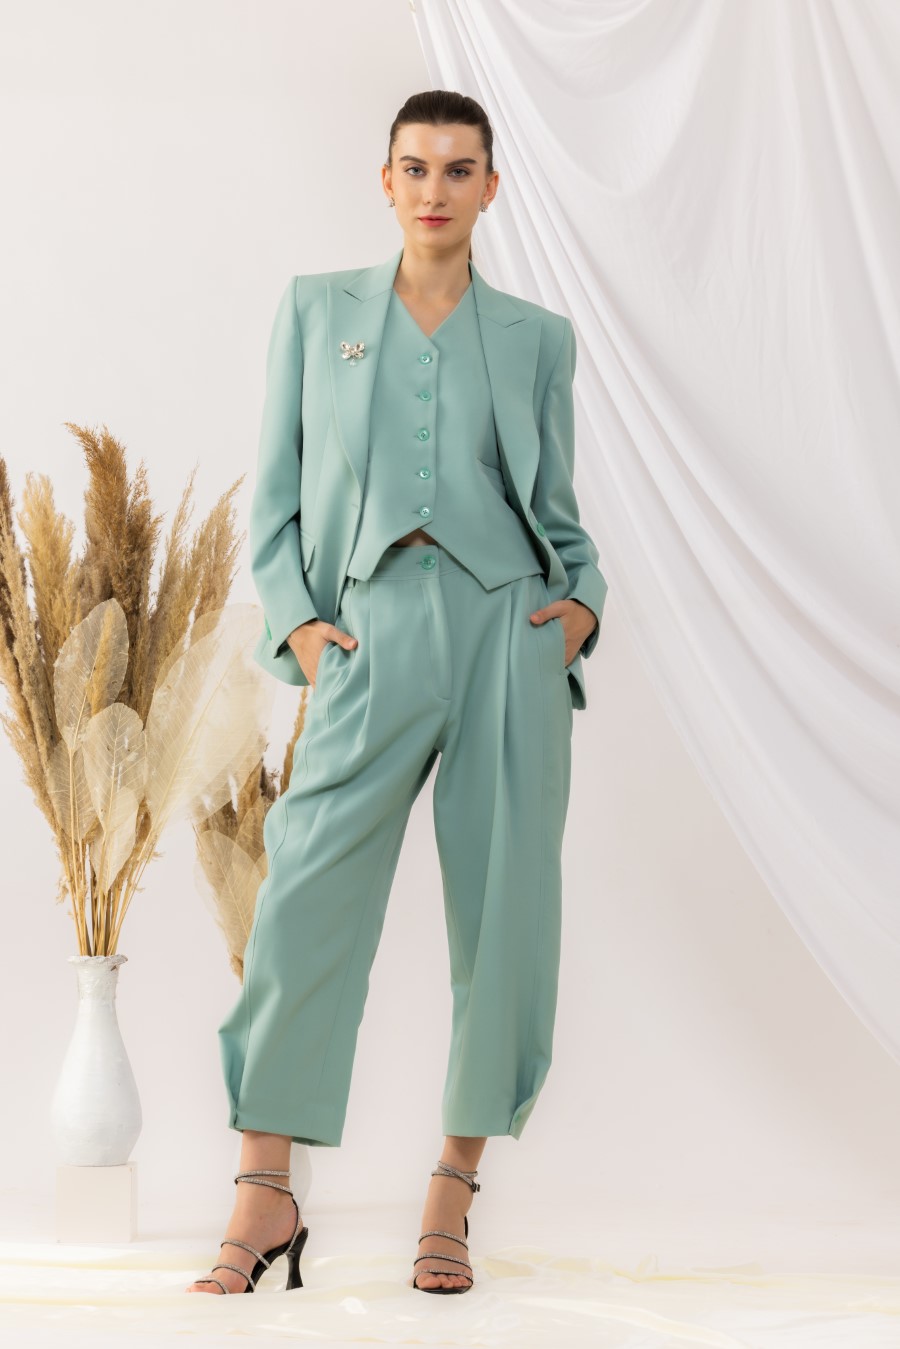 Sea Green Single Button Blazer With Waist Coat And yoka style Pant set